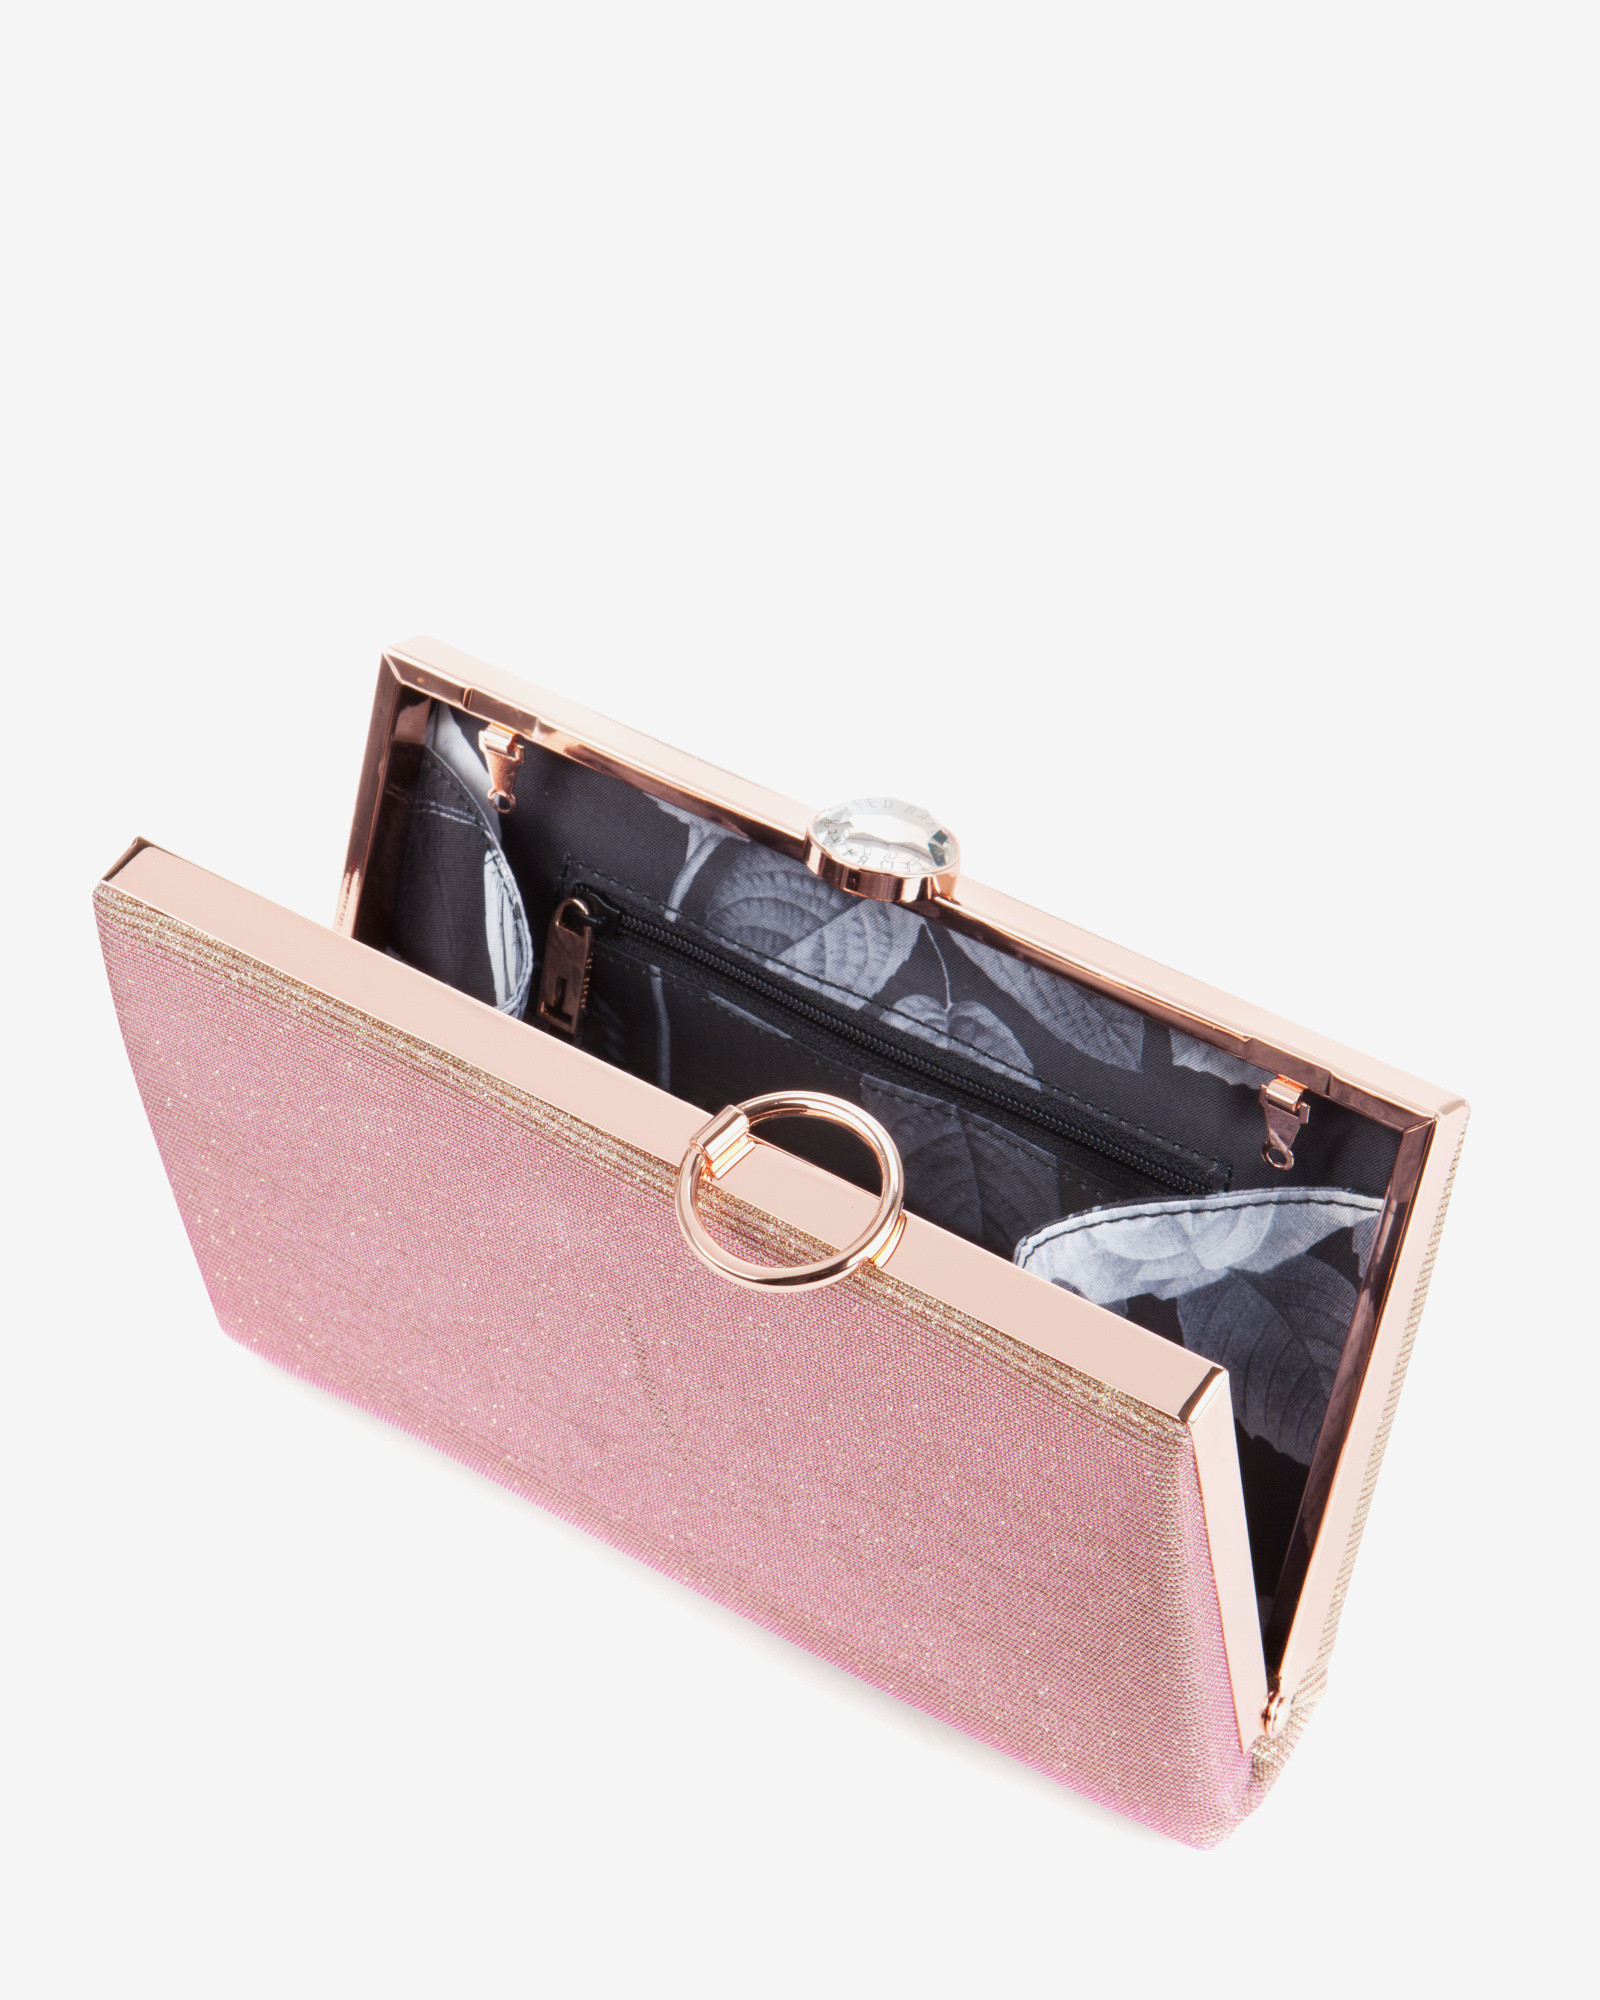 Ted Baker Hard Case Glitter Clutch Bag in Pink | Lyst